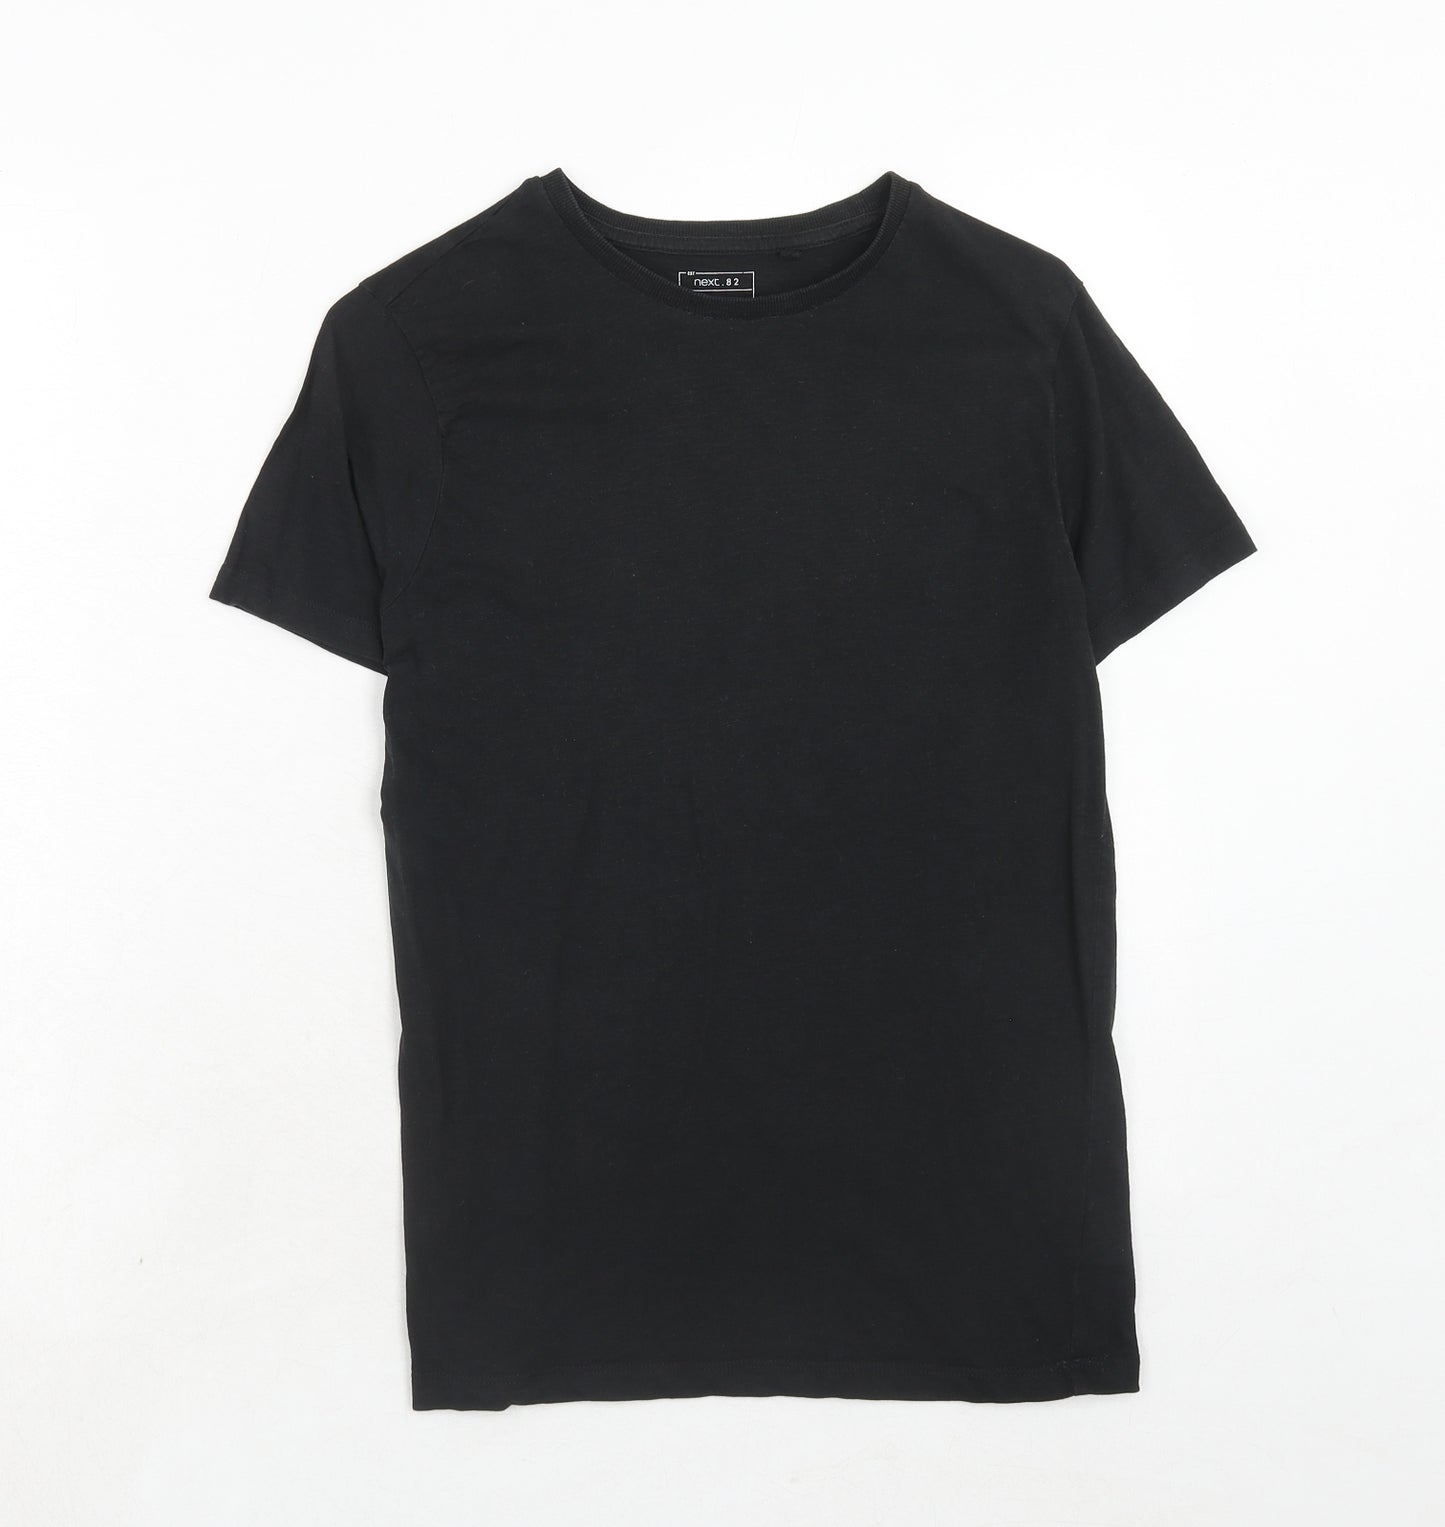 NEXT Boys Black Cotton Basic T-Shirt Size 13 Years Crew Neck Pullover